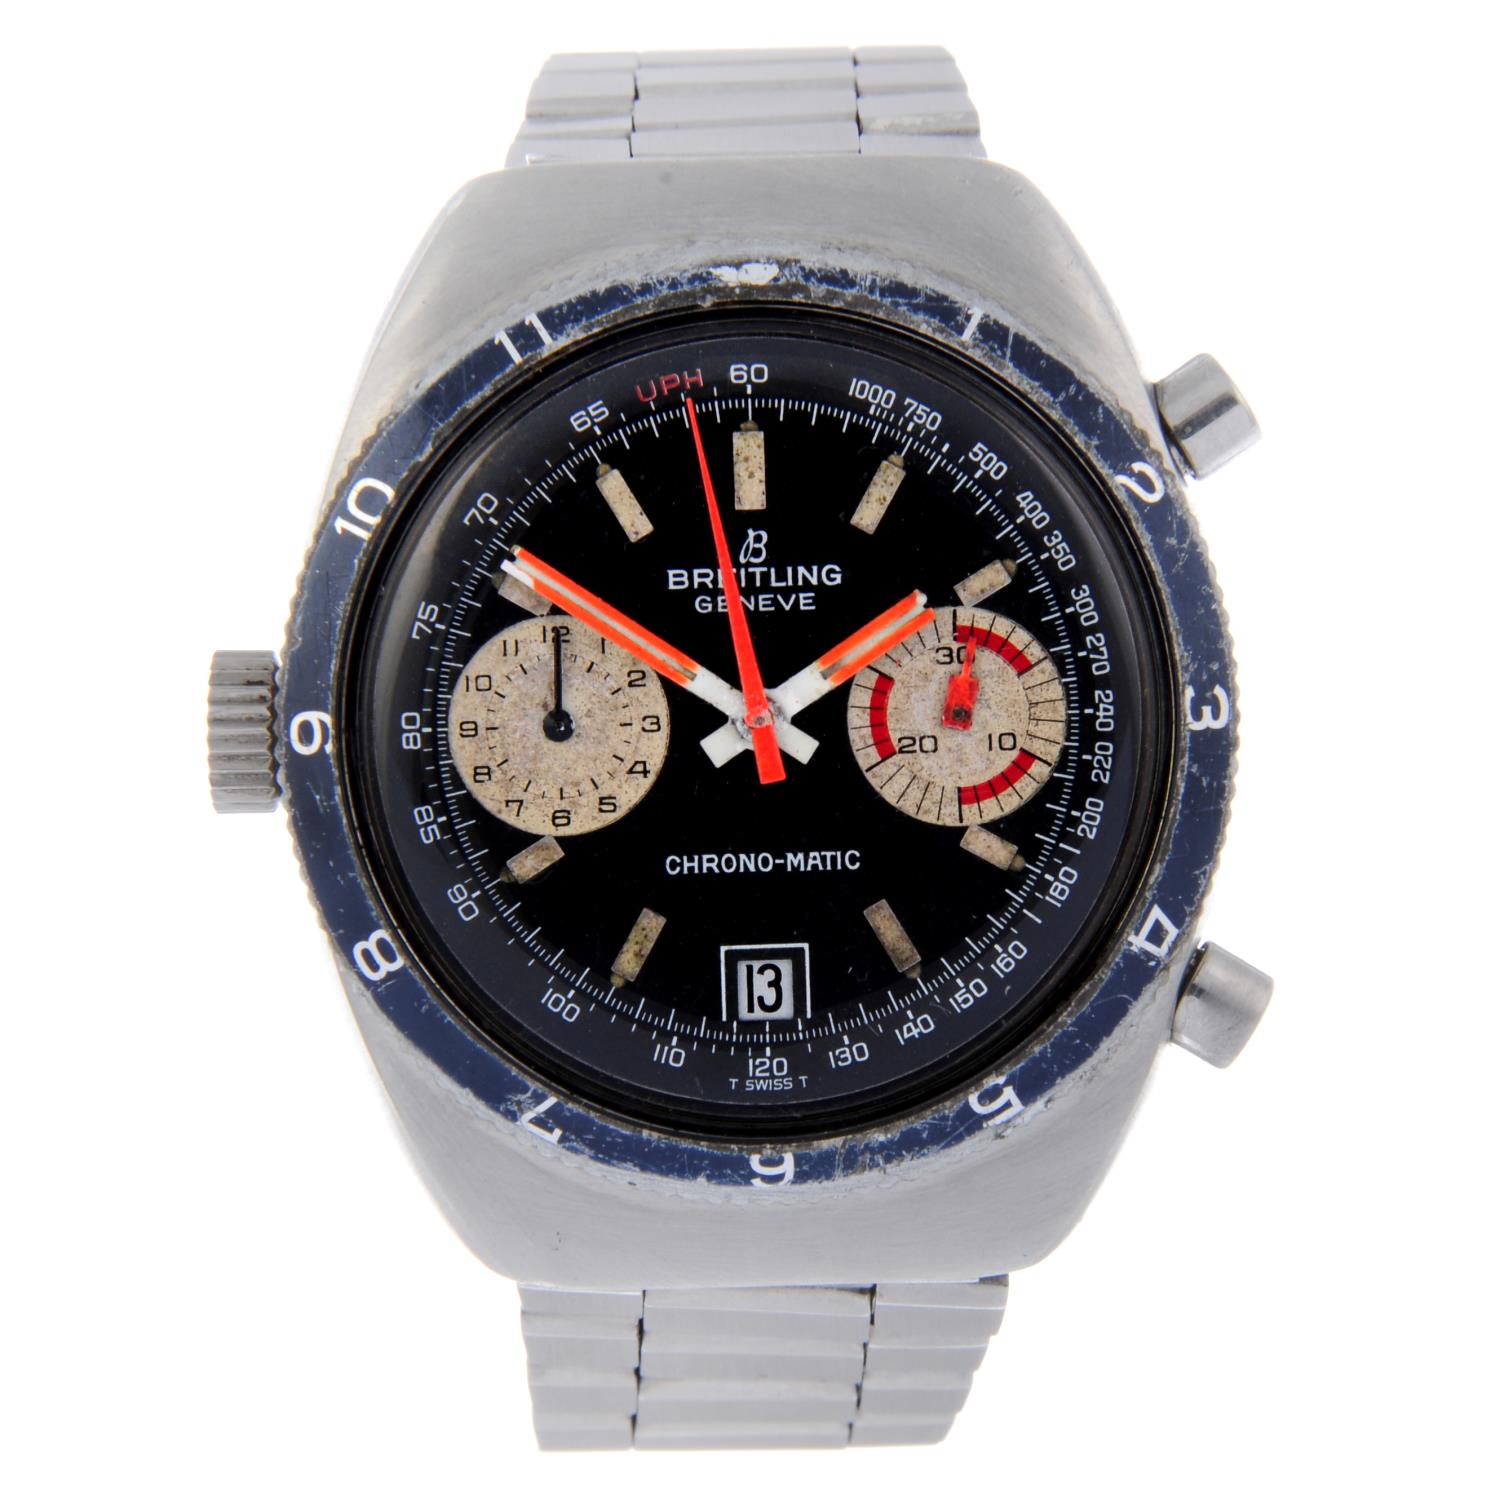 BREITLING - a gentleman's Chrono-Matic chronograph bracelet watch.